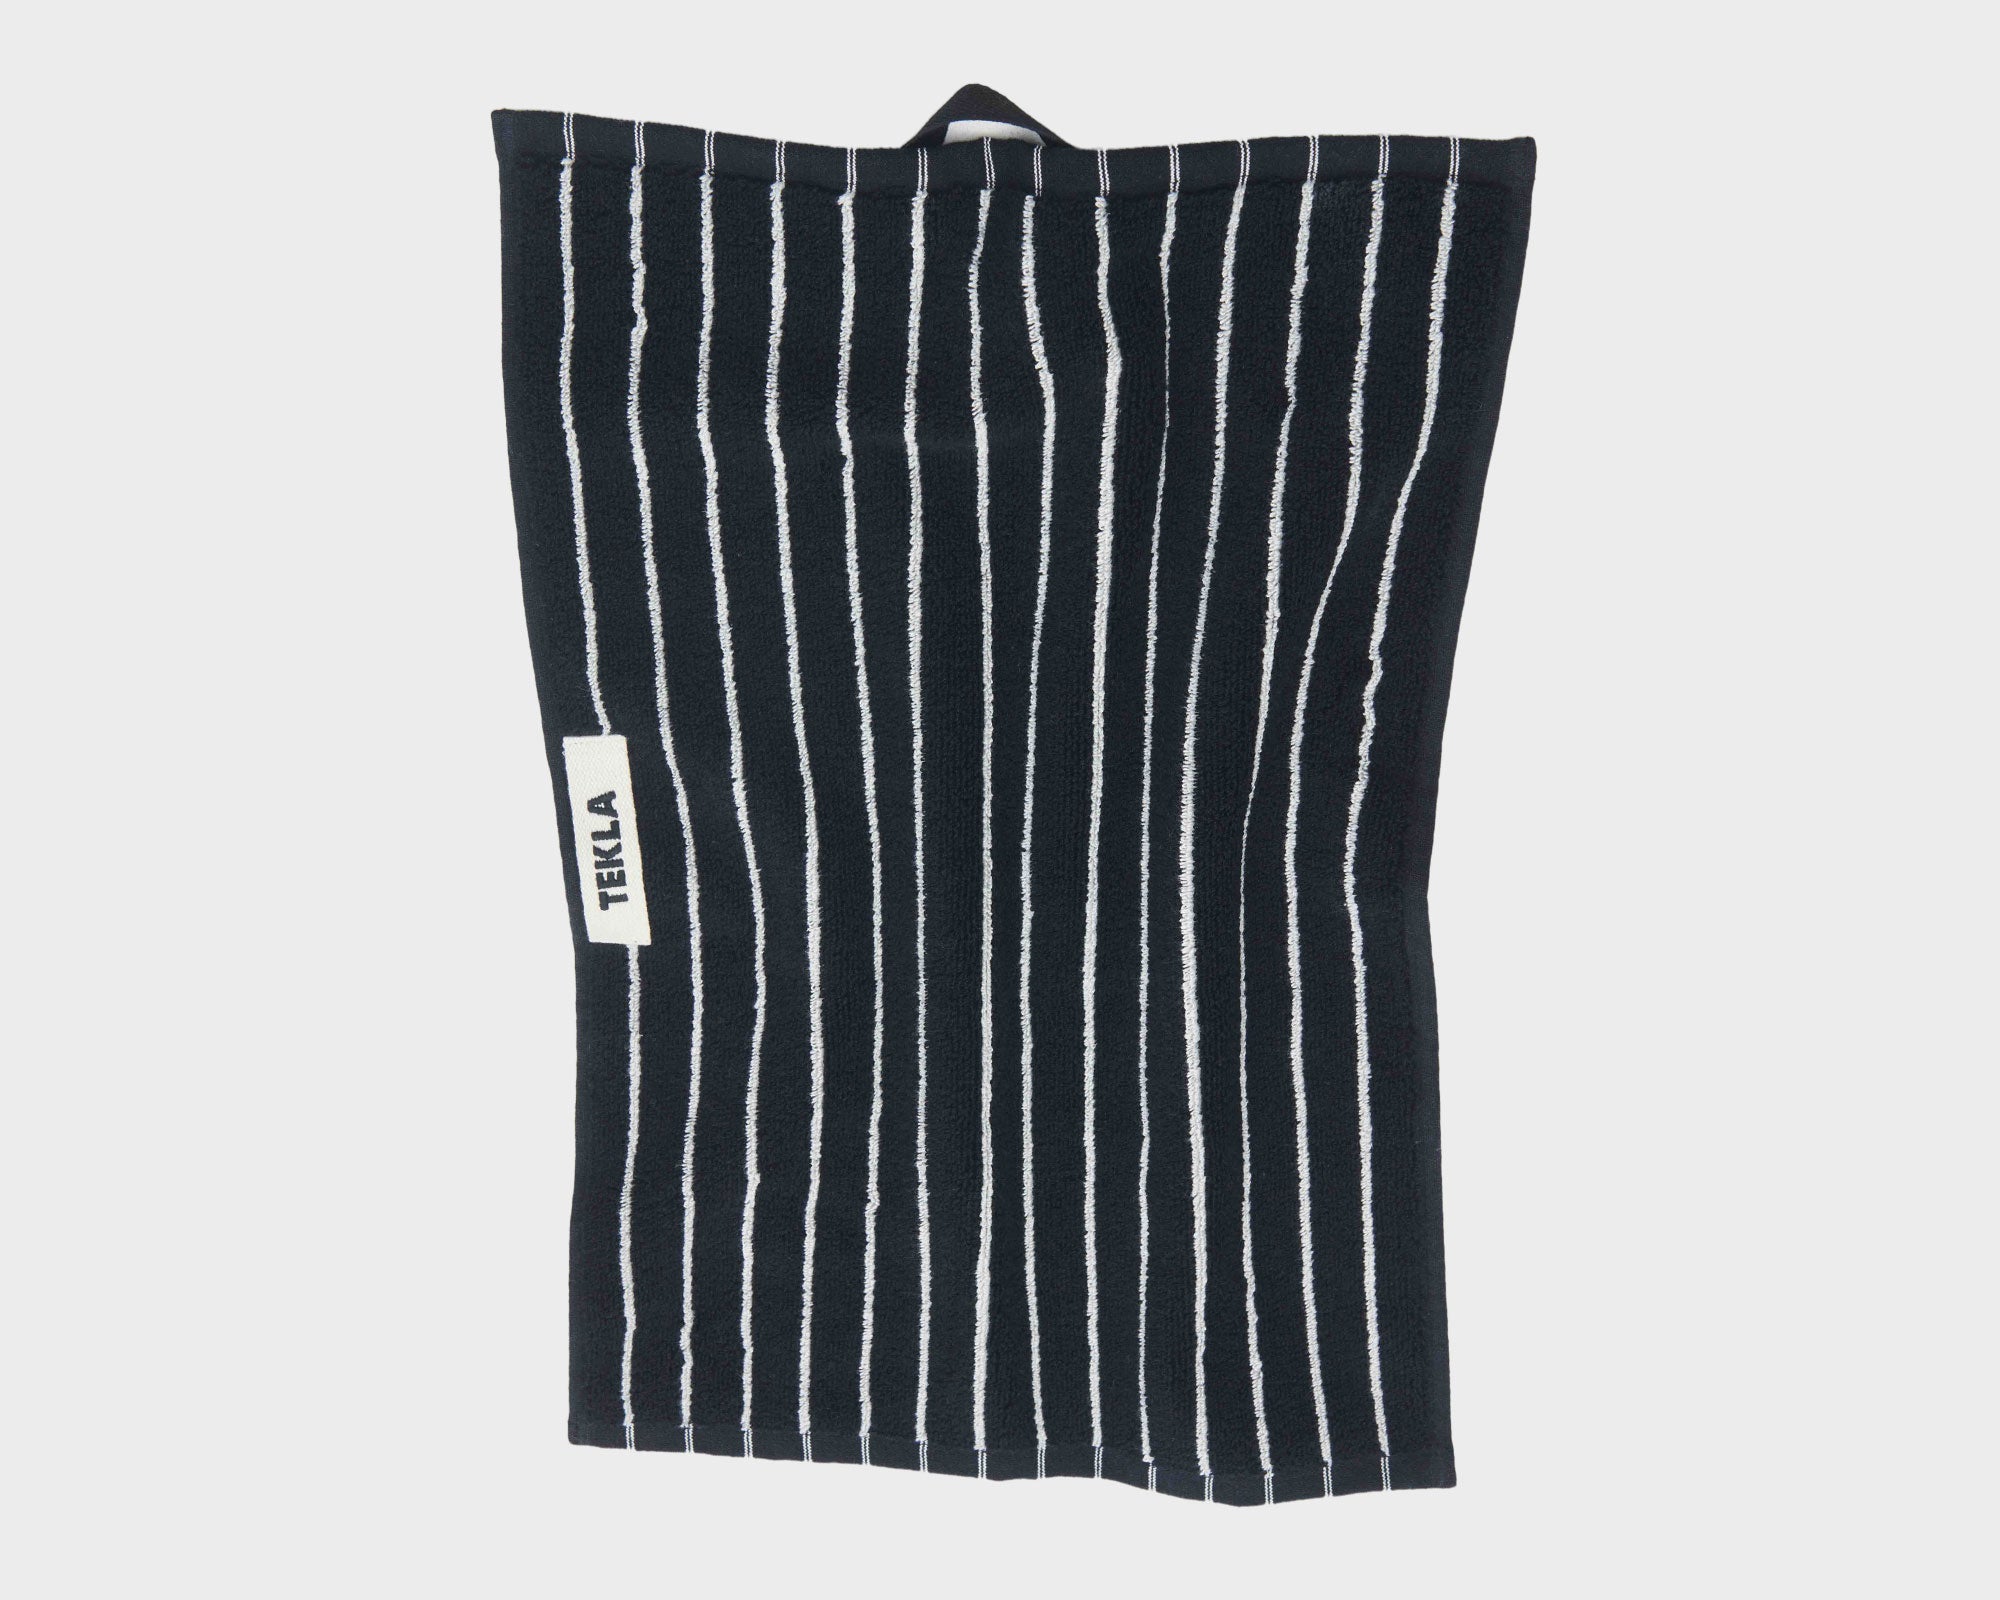 Tekla Organic Cotton Towel - Black Stripes